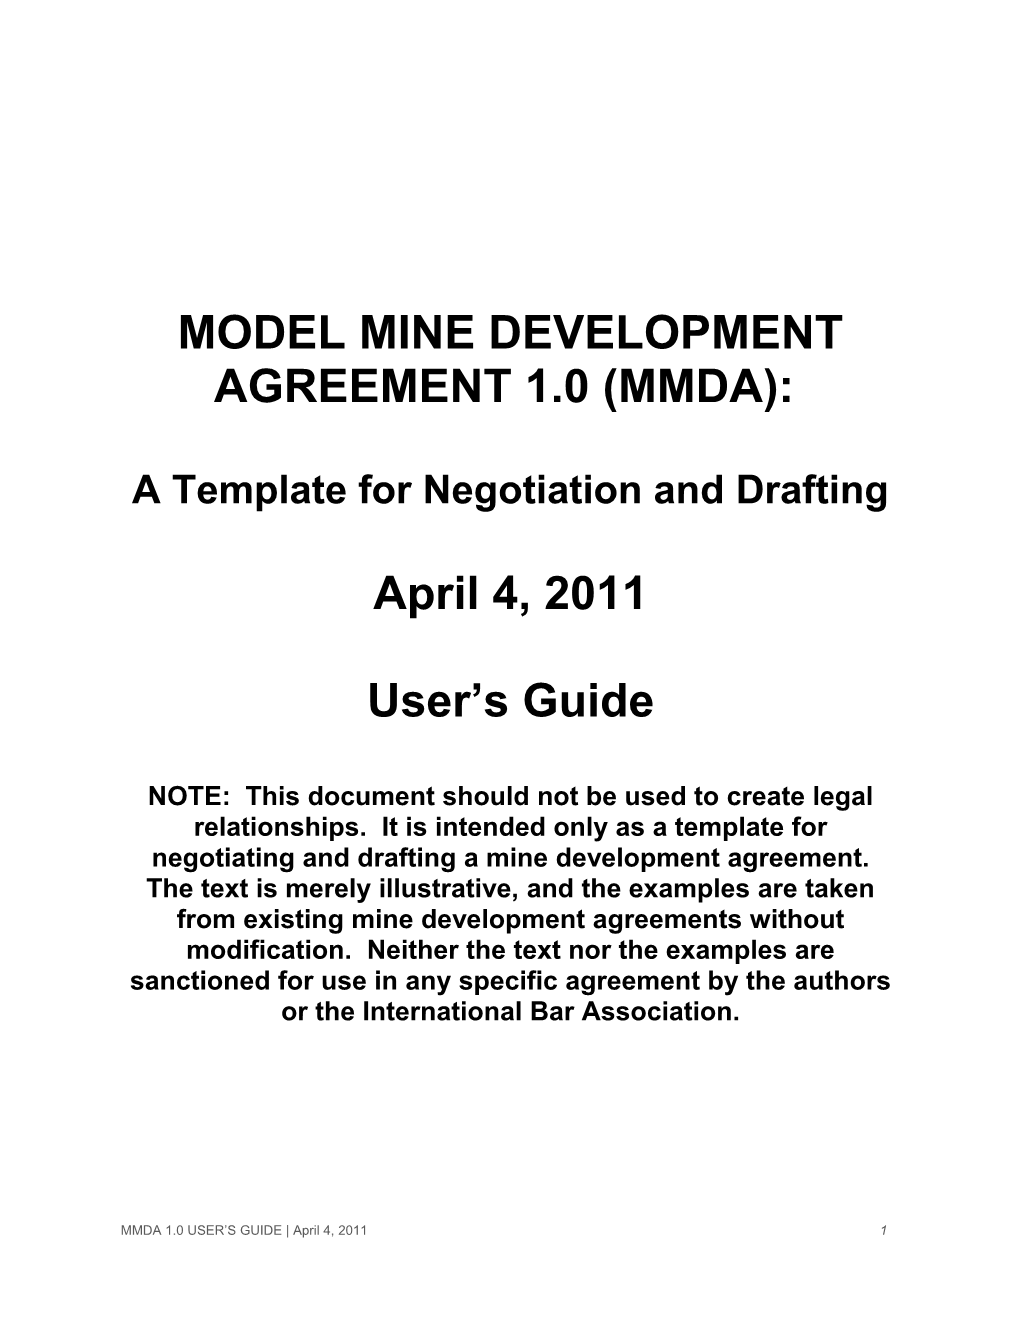 Model Mine Development Agreement 1.0 (Mmda)